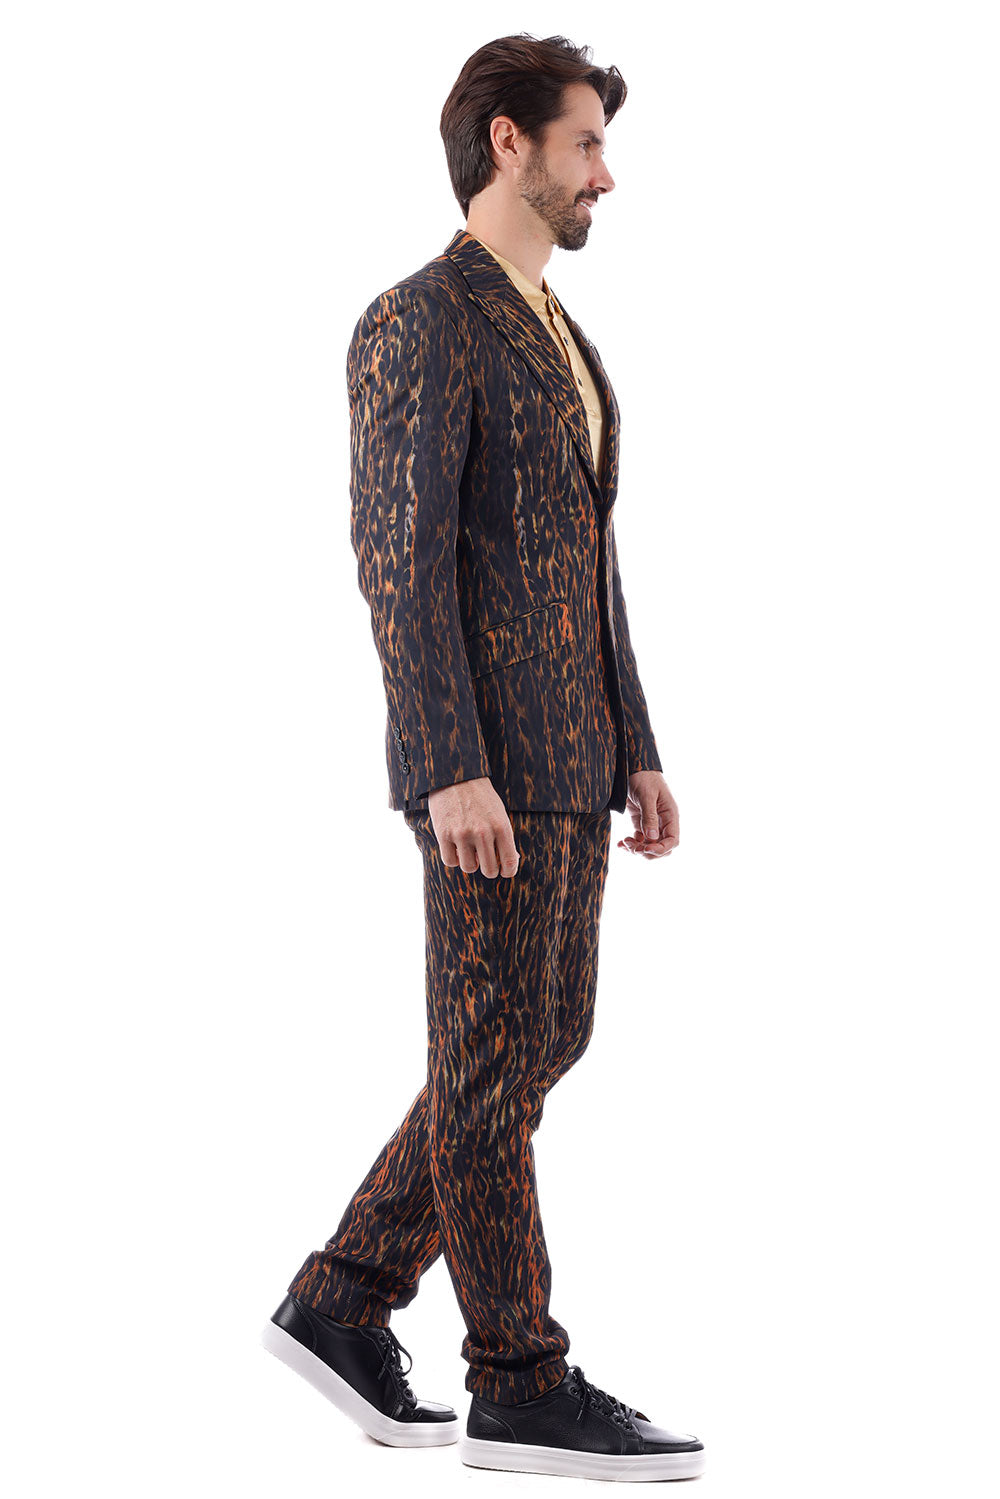 BARABAS Men's Leopard Animal Peak Lapel Suit 3SU23 Brown